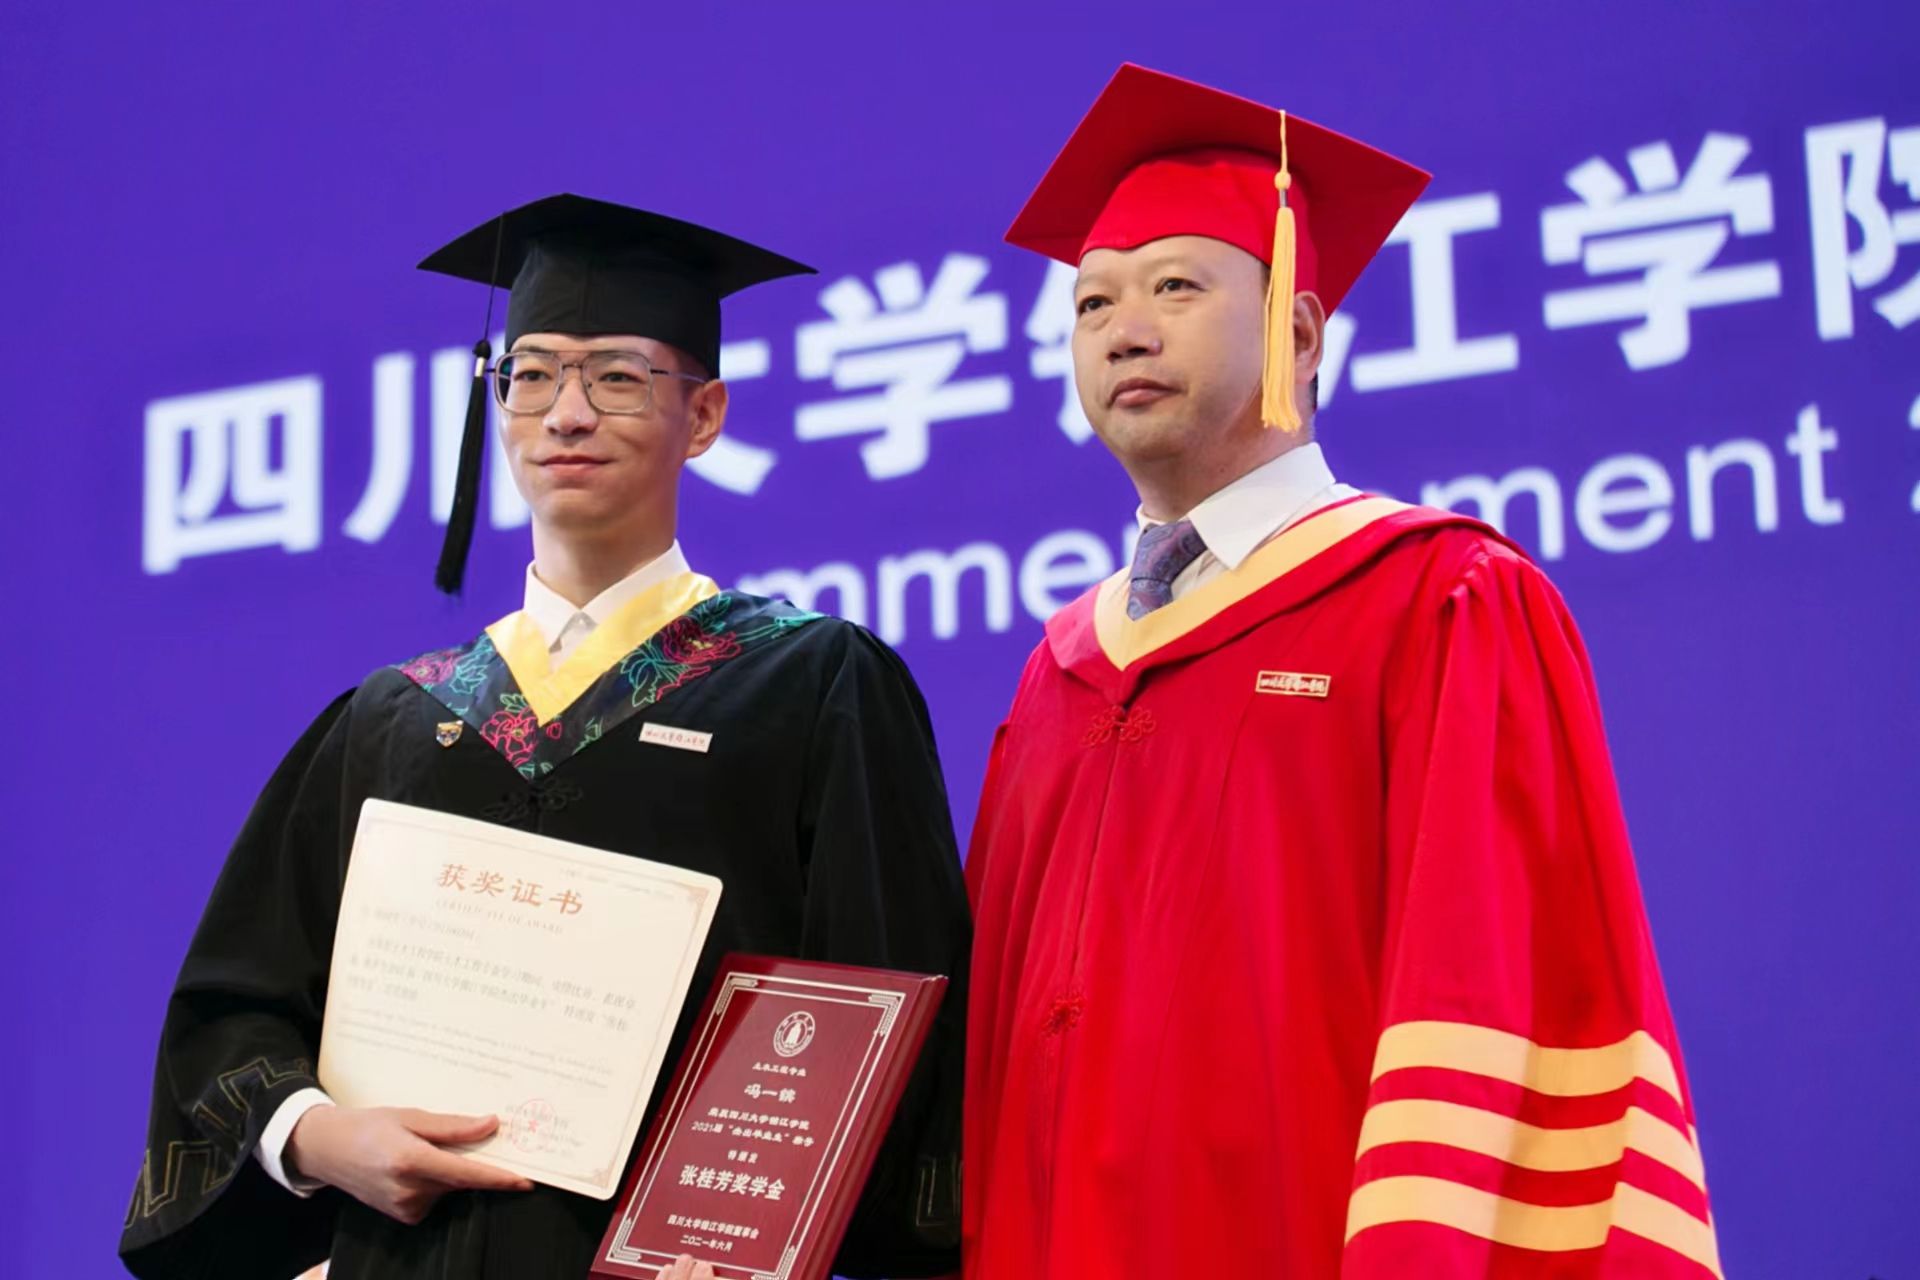 Outstanding Graduate of SUJC